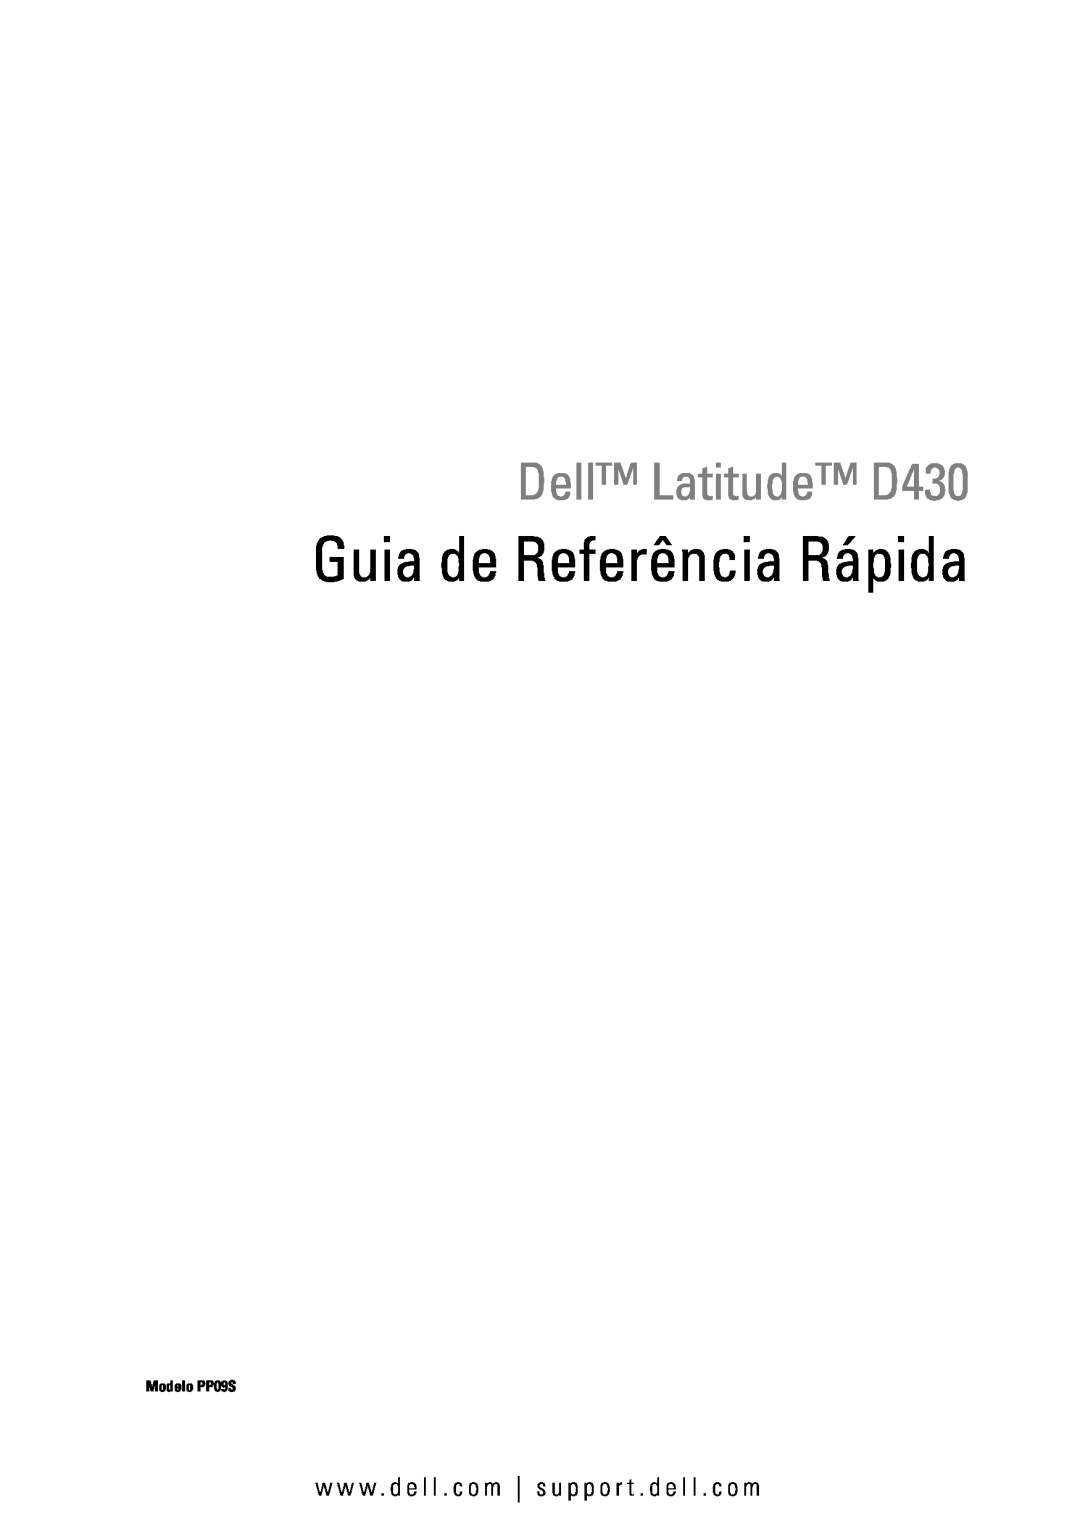 Dell manual Guia de Referência Rápida, Dell Latitude D430, w w w . d e l l . c o m s u p p o r t . d e l l . c o m 